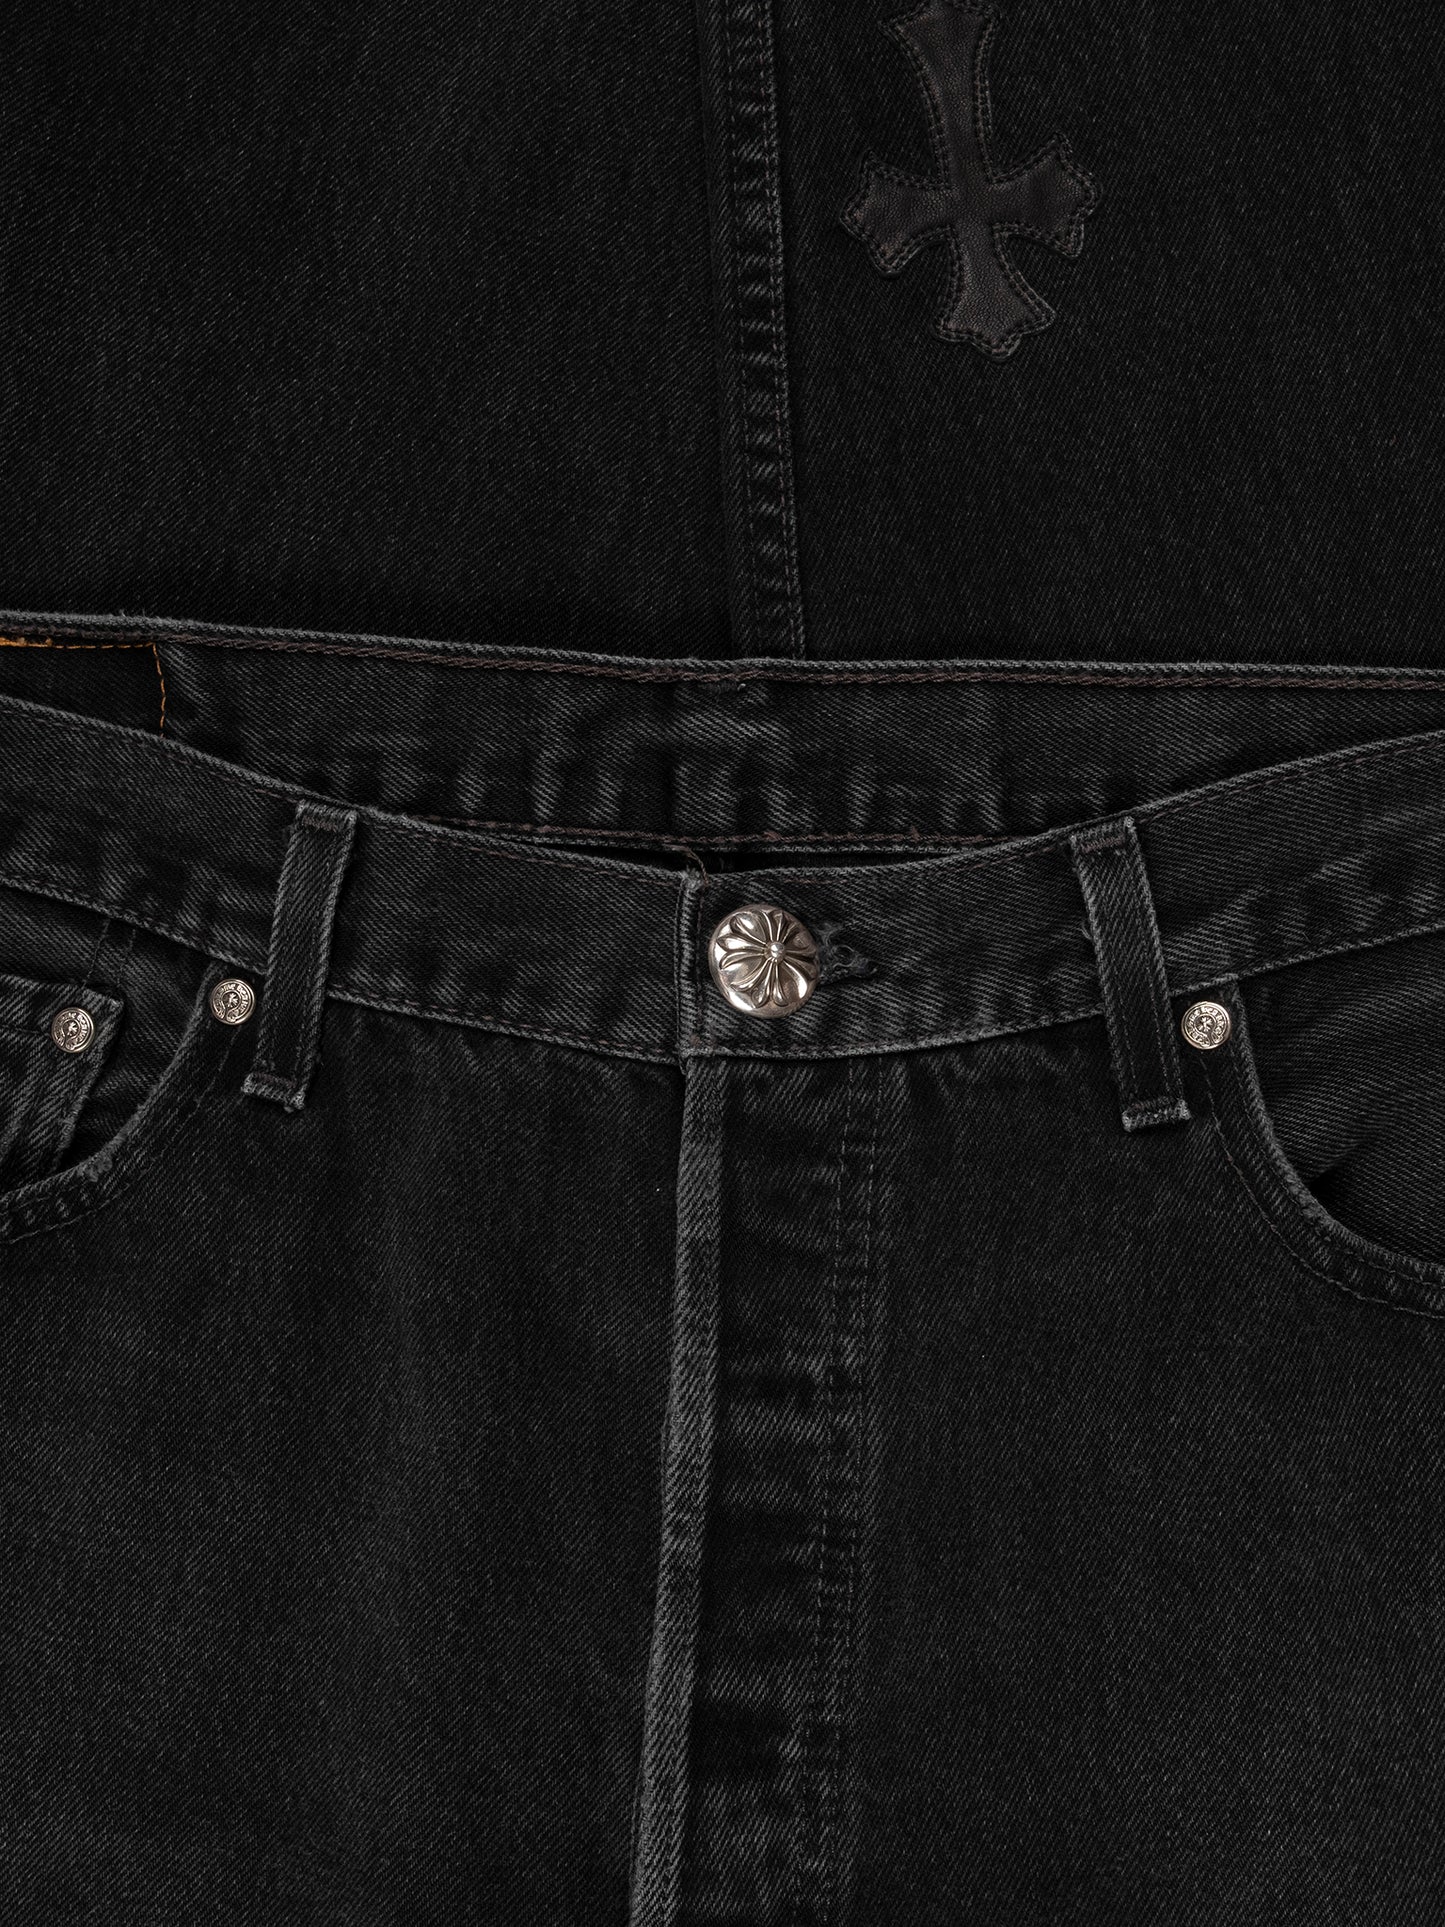 Black Cross Patch Jeans